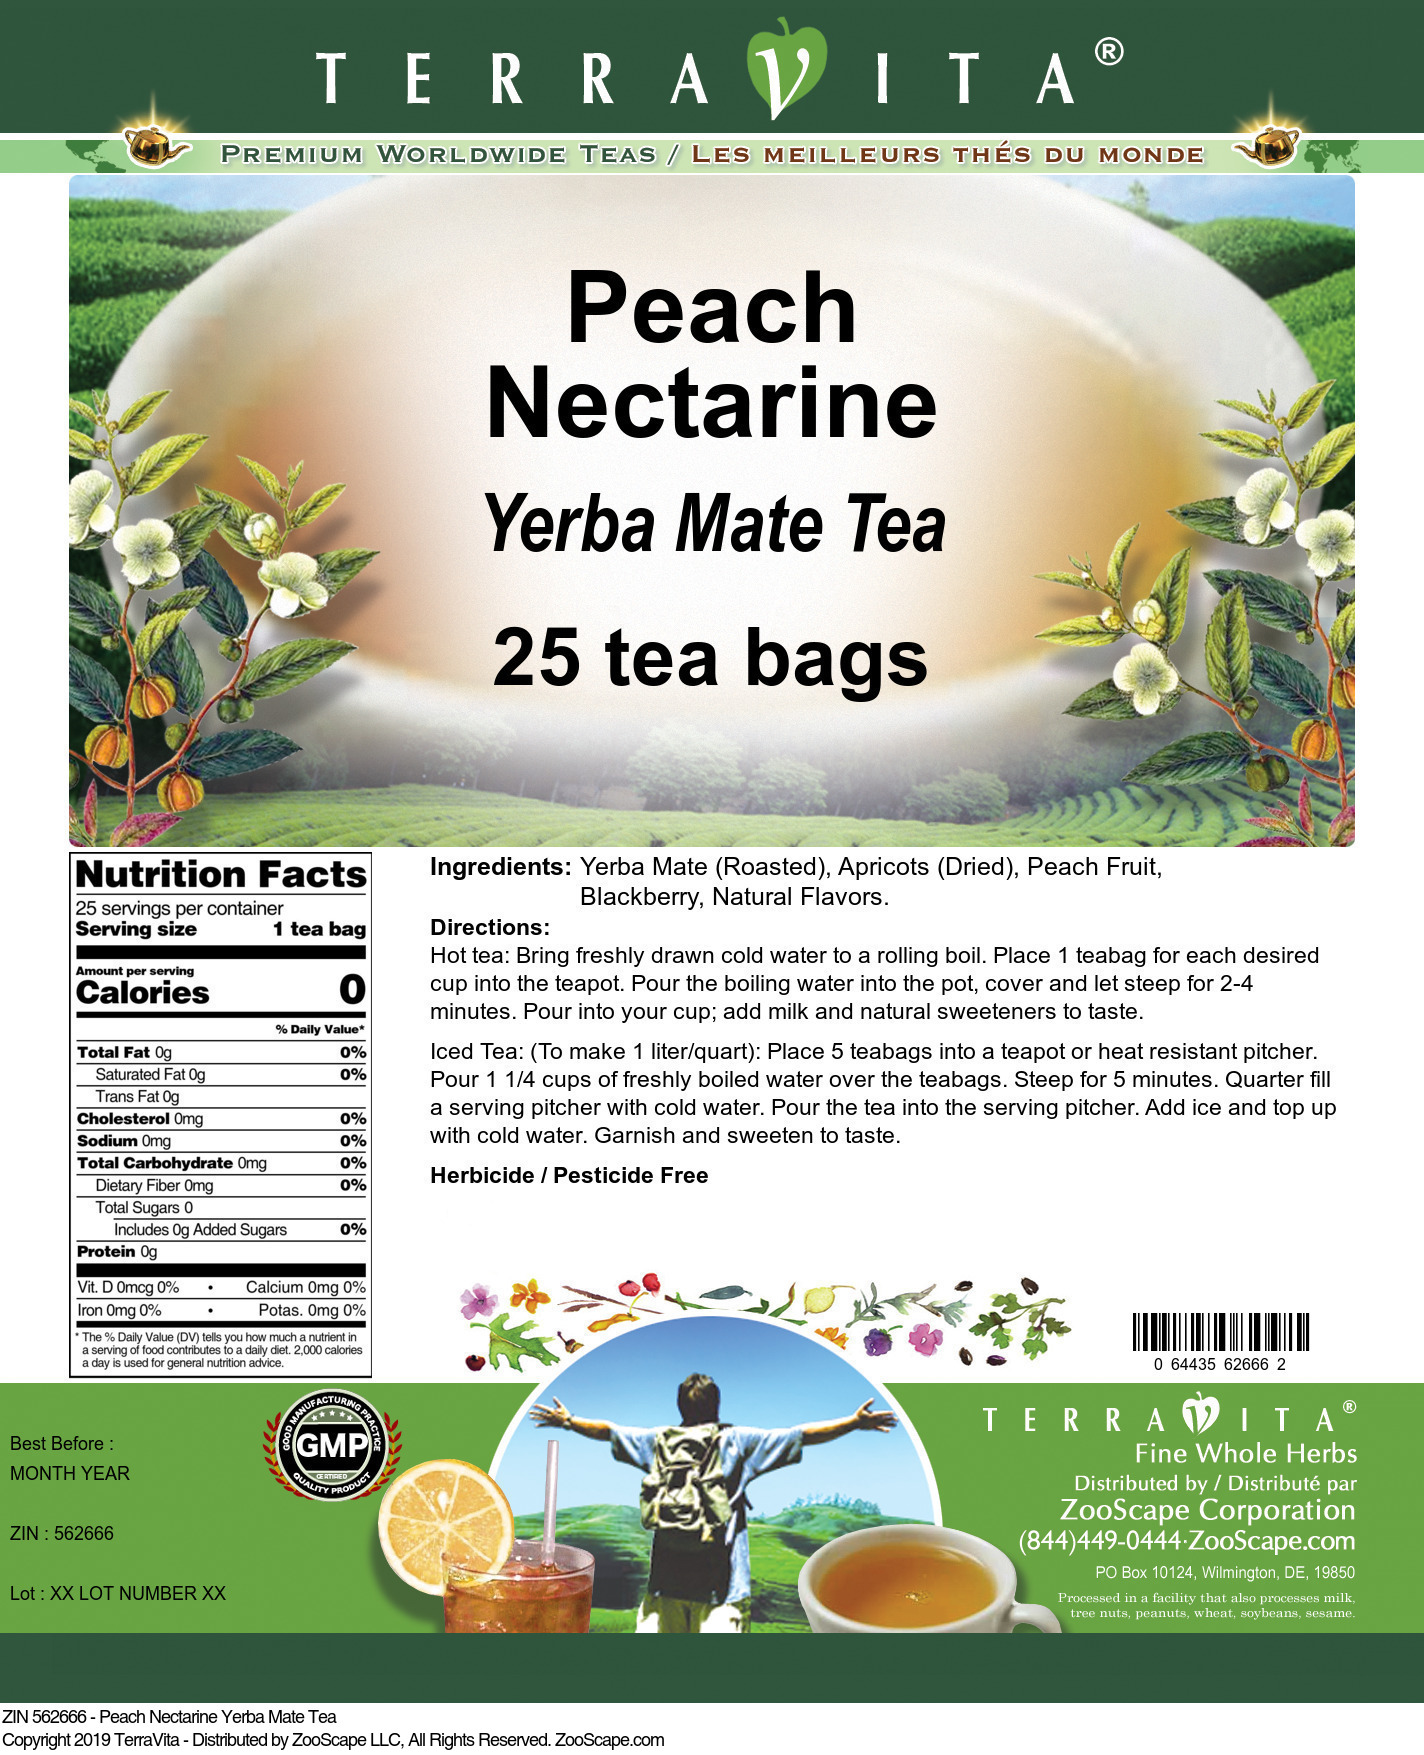 Peach Nectarine Yerba Mate Tea - Label